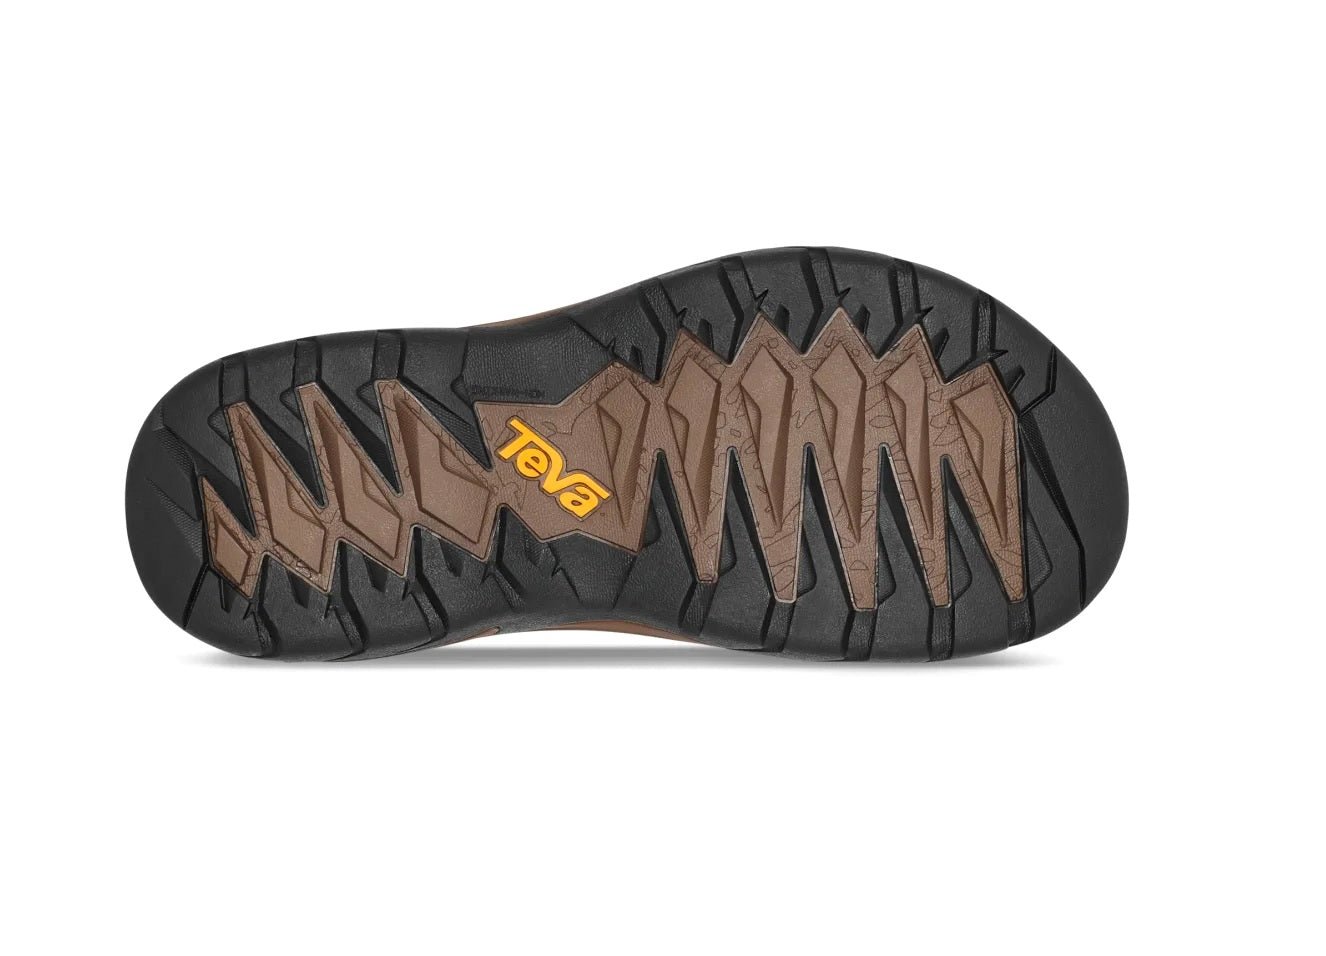 'Terra FI 5' men's sandal - Chaplinshoes'Terra FI 5' men's sandalTeva